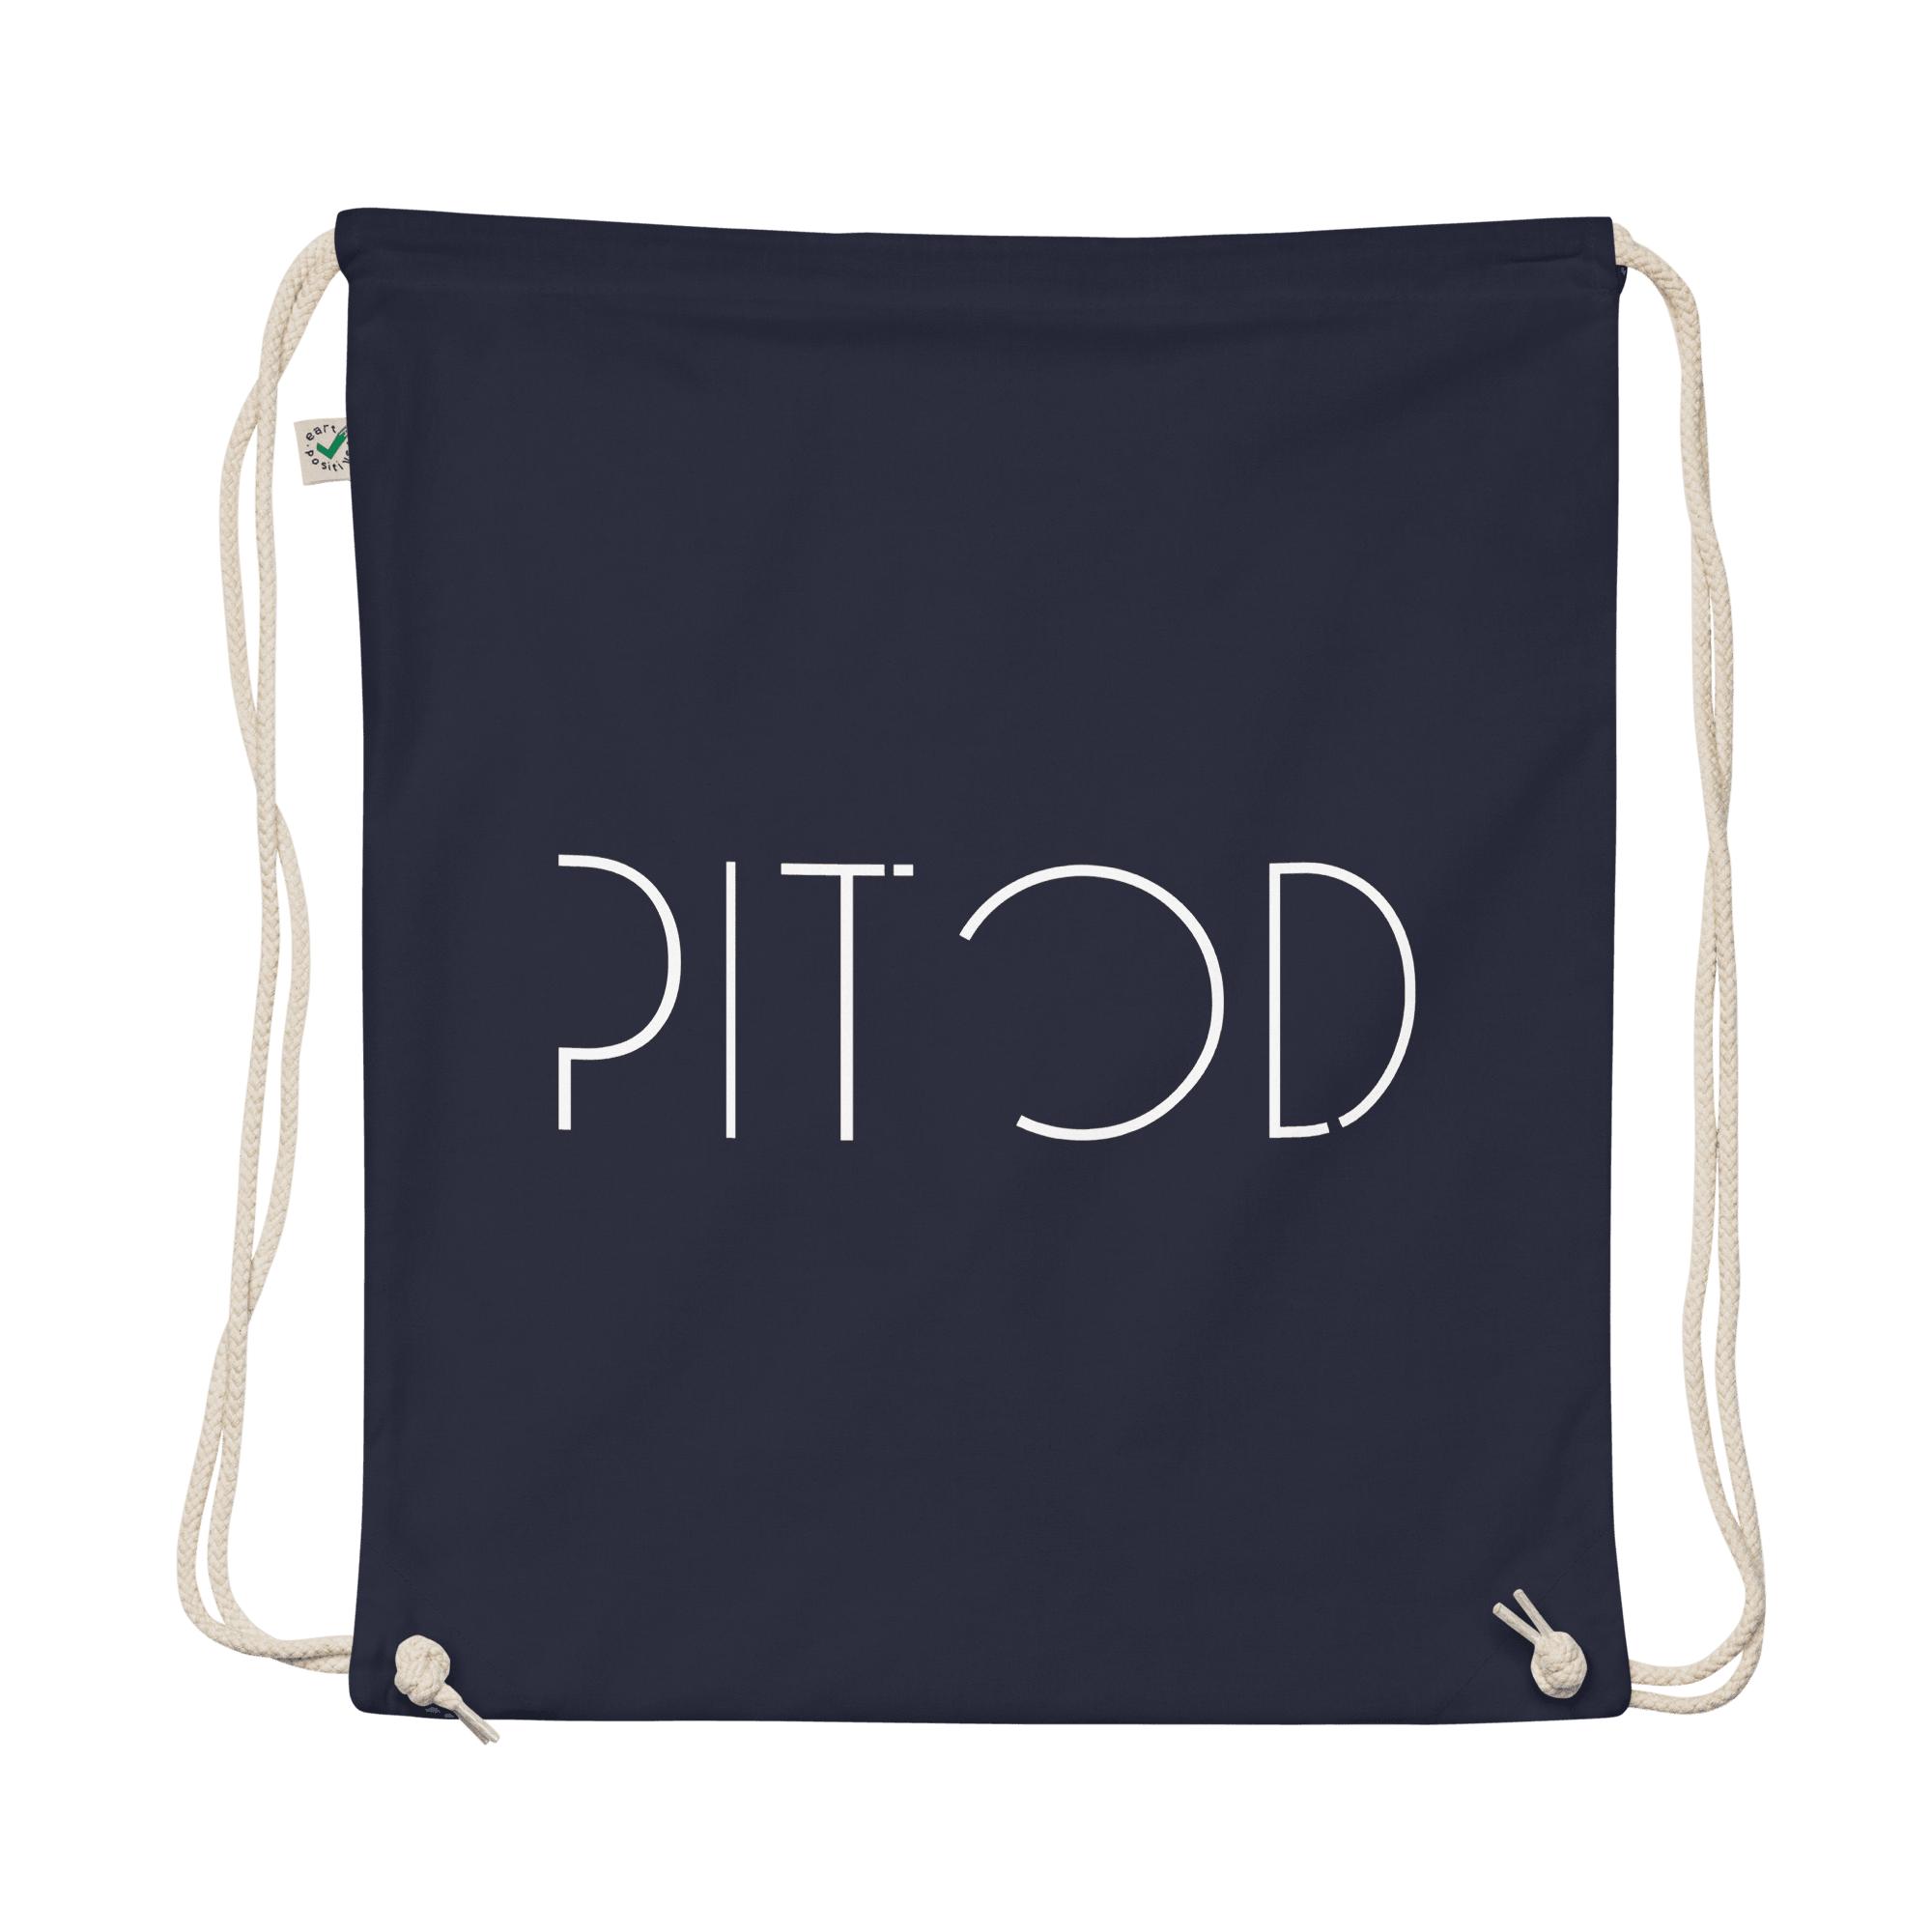 pitod's affiliate program product